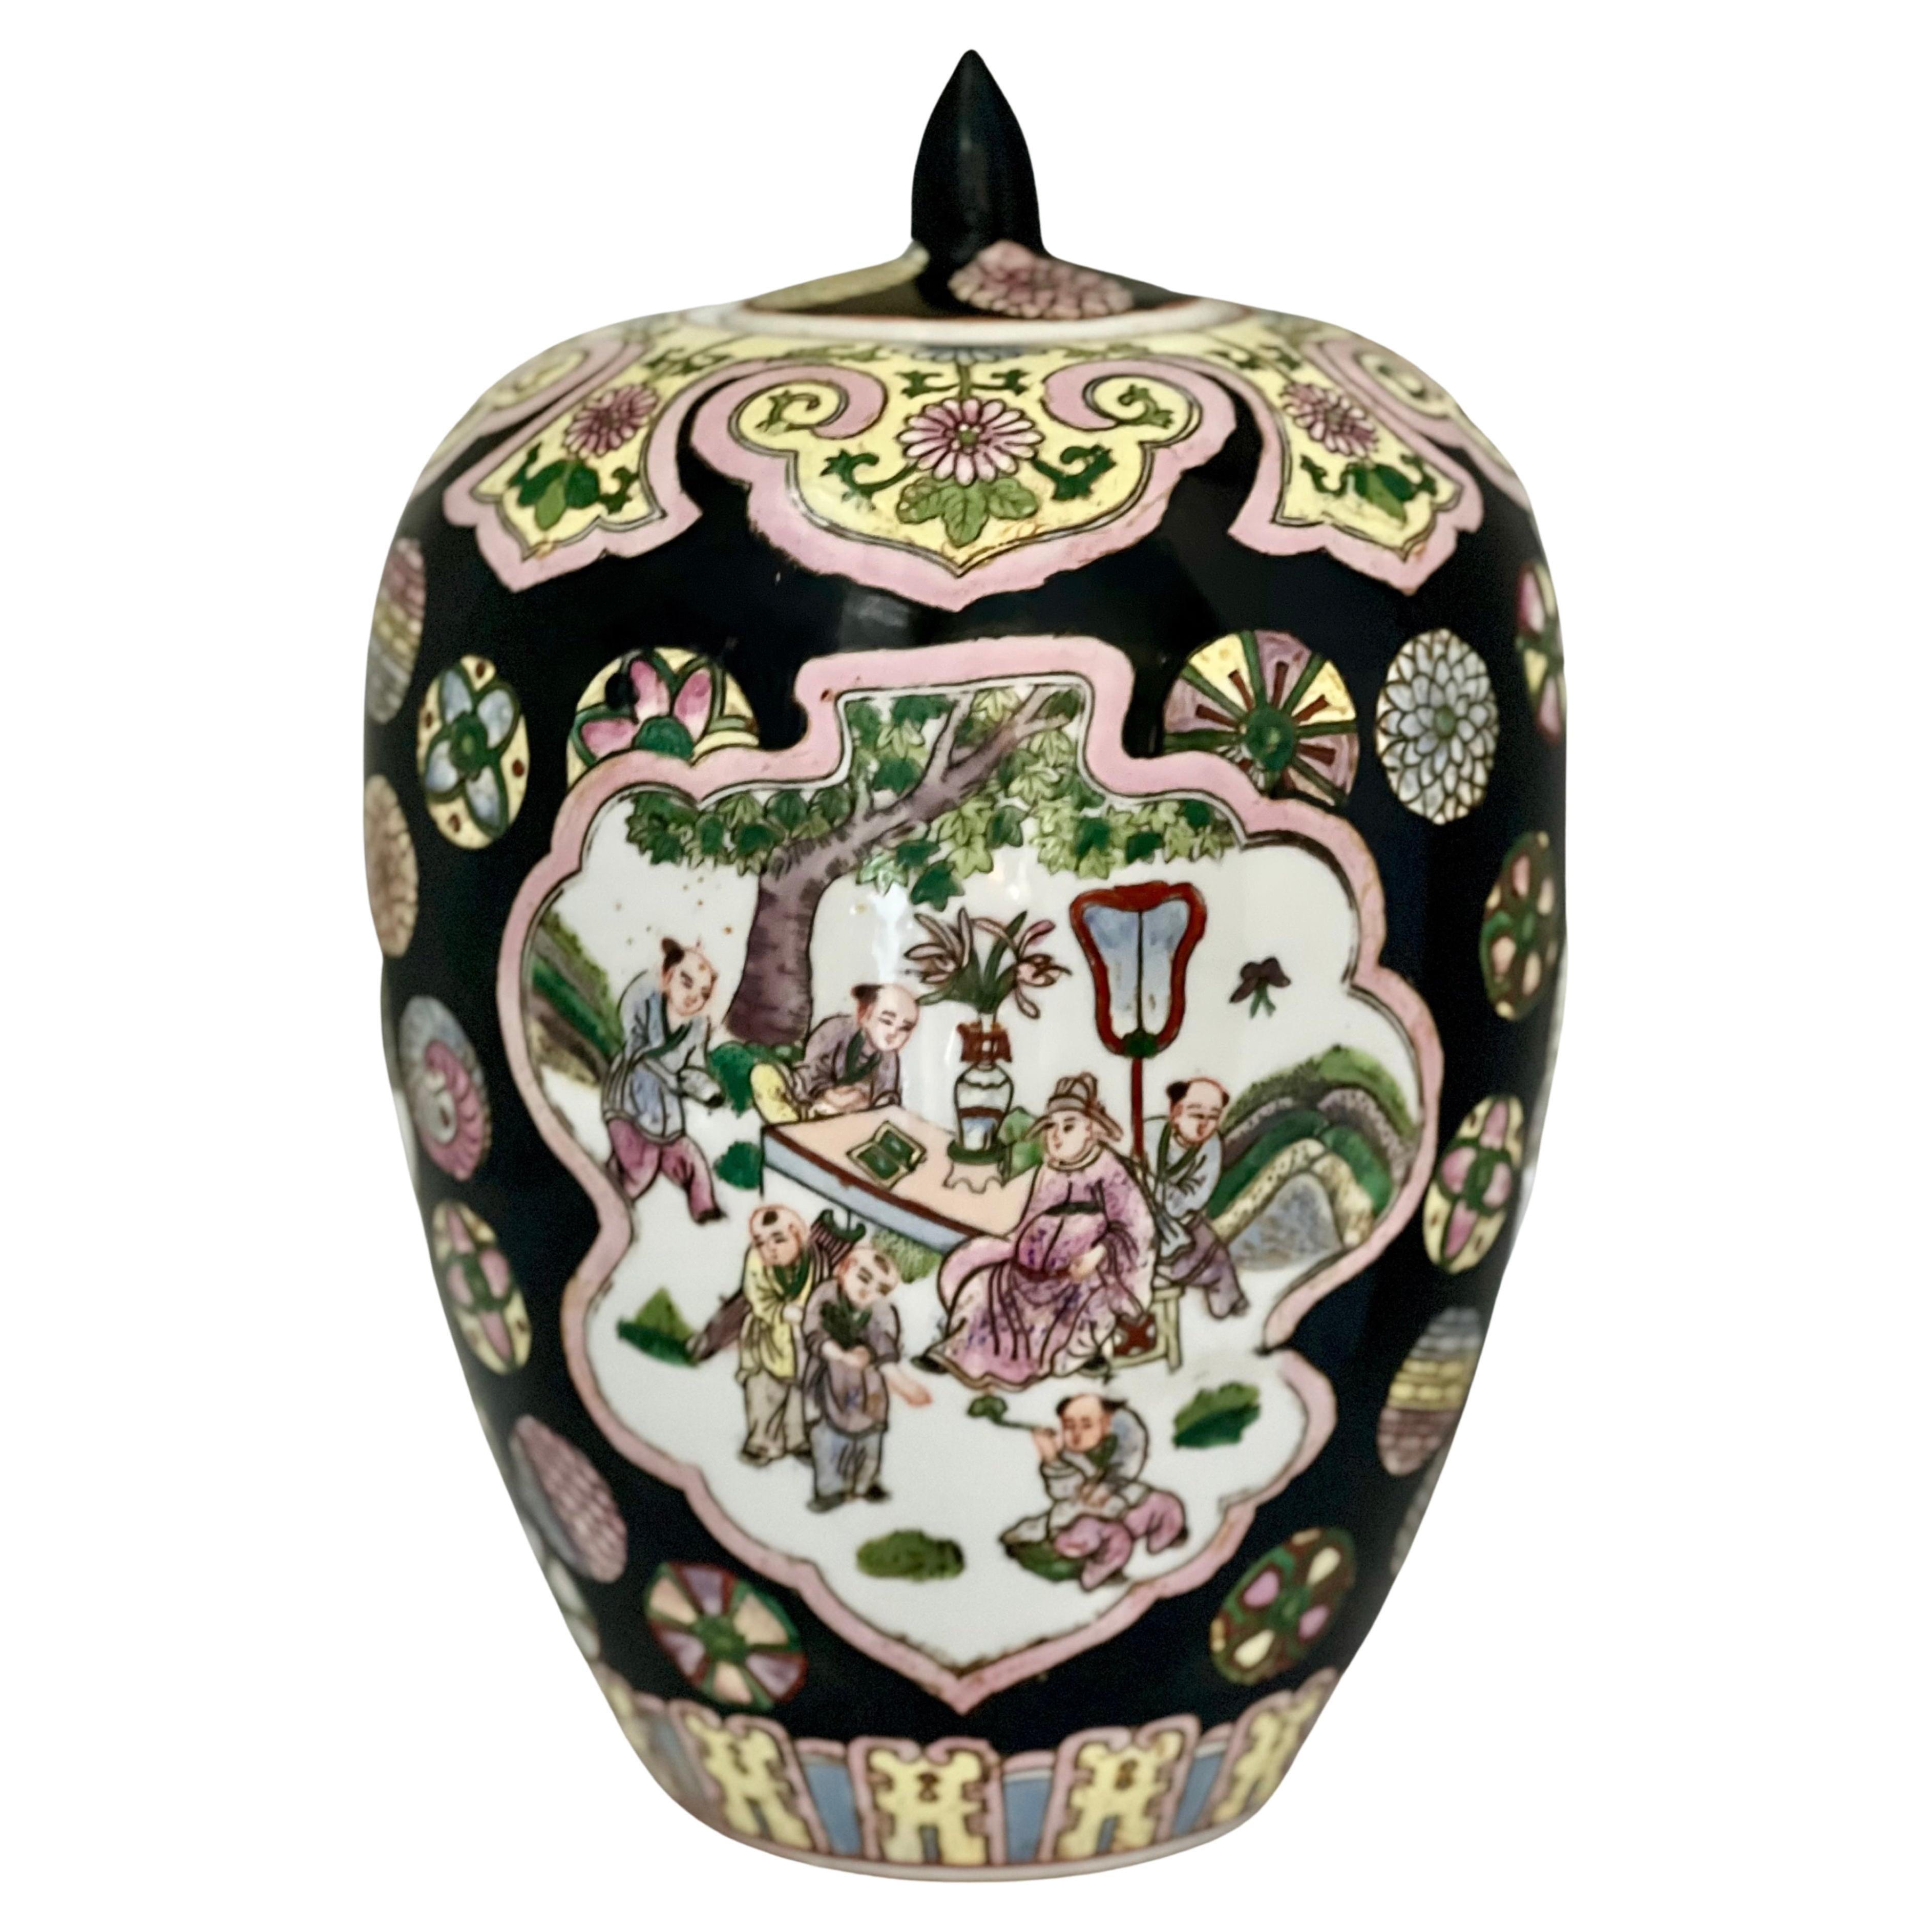 Vintage Chinese Famille Noire Porcelain Ovoid Ginger Jar with Lid